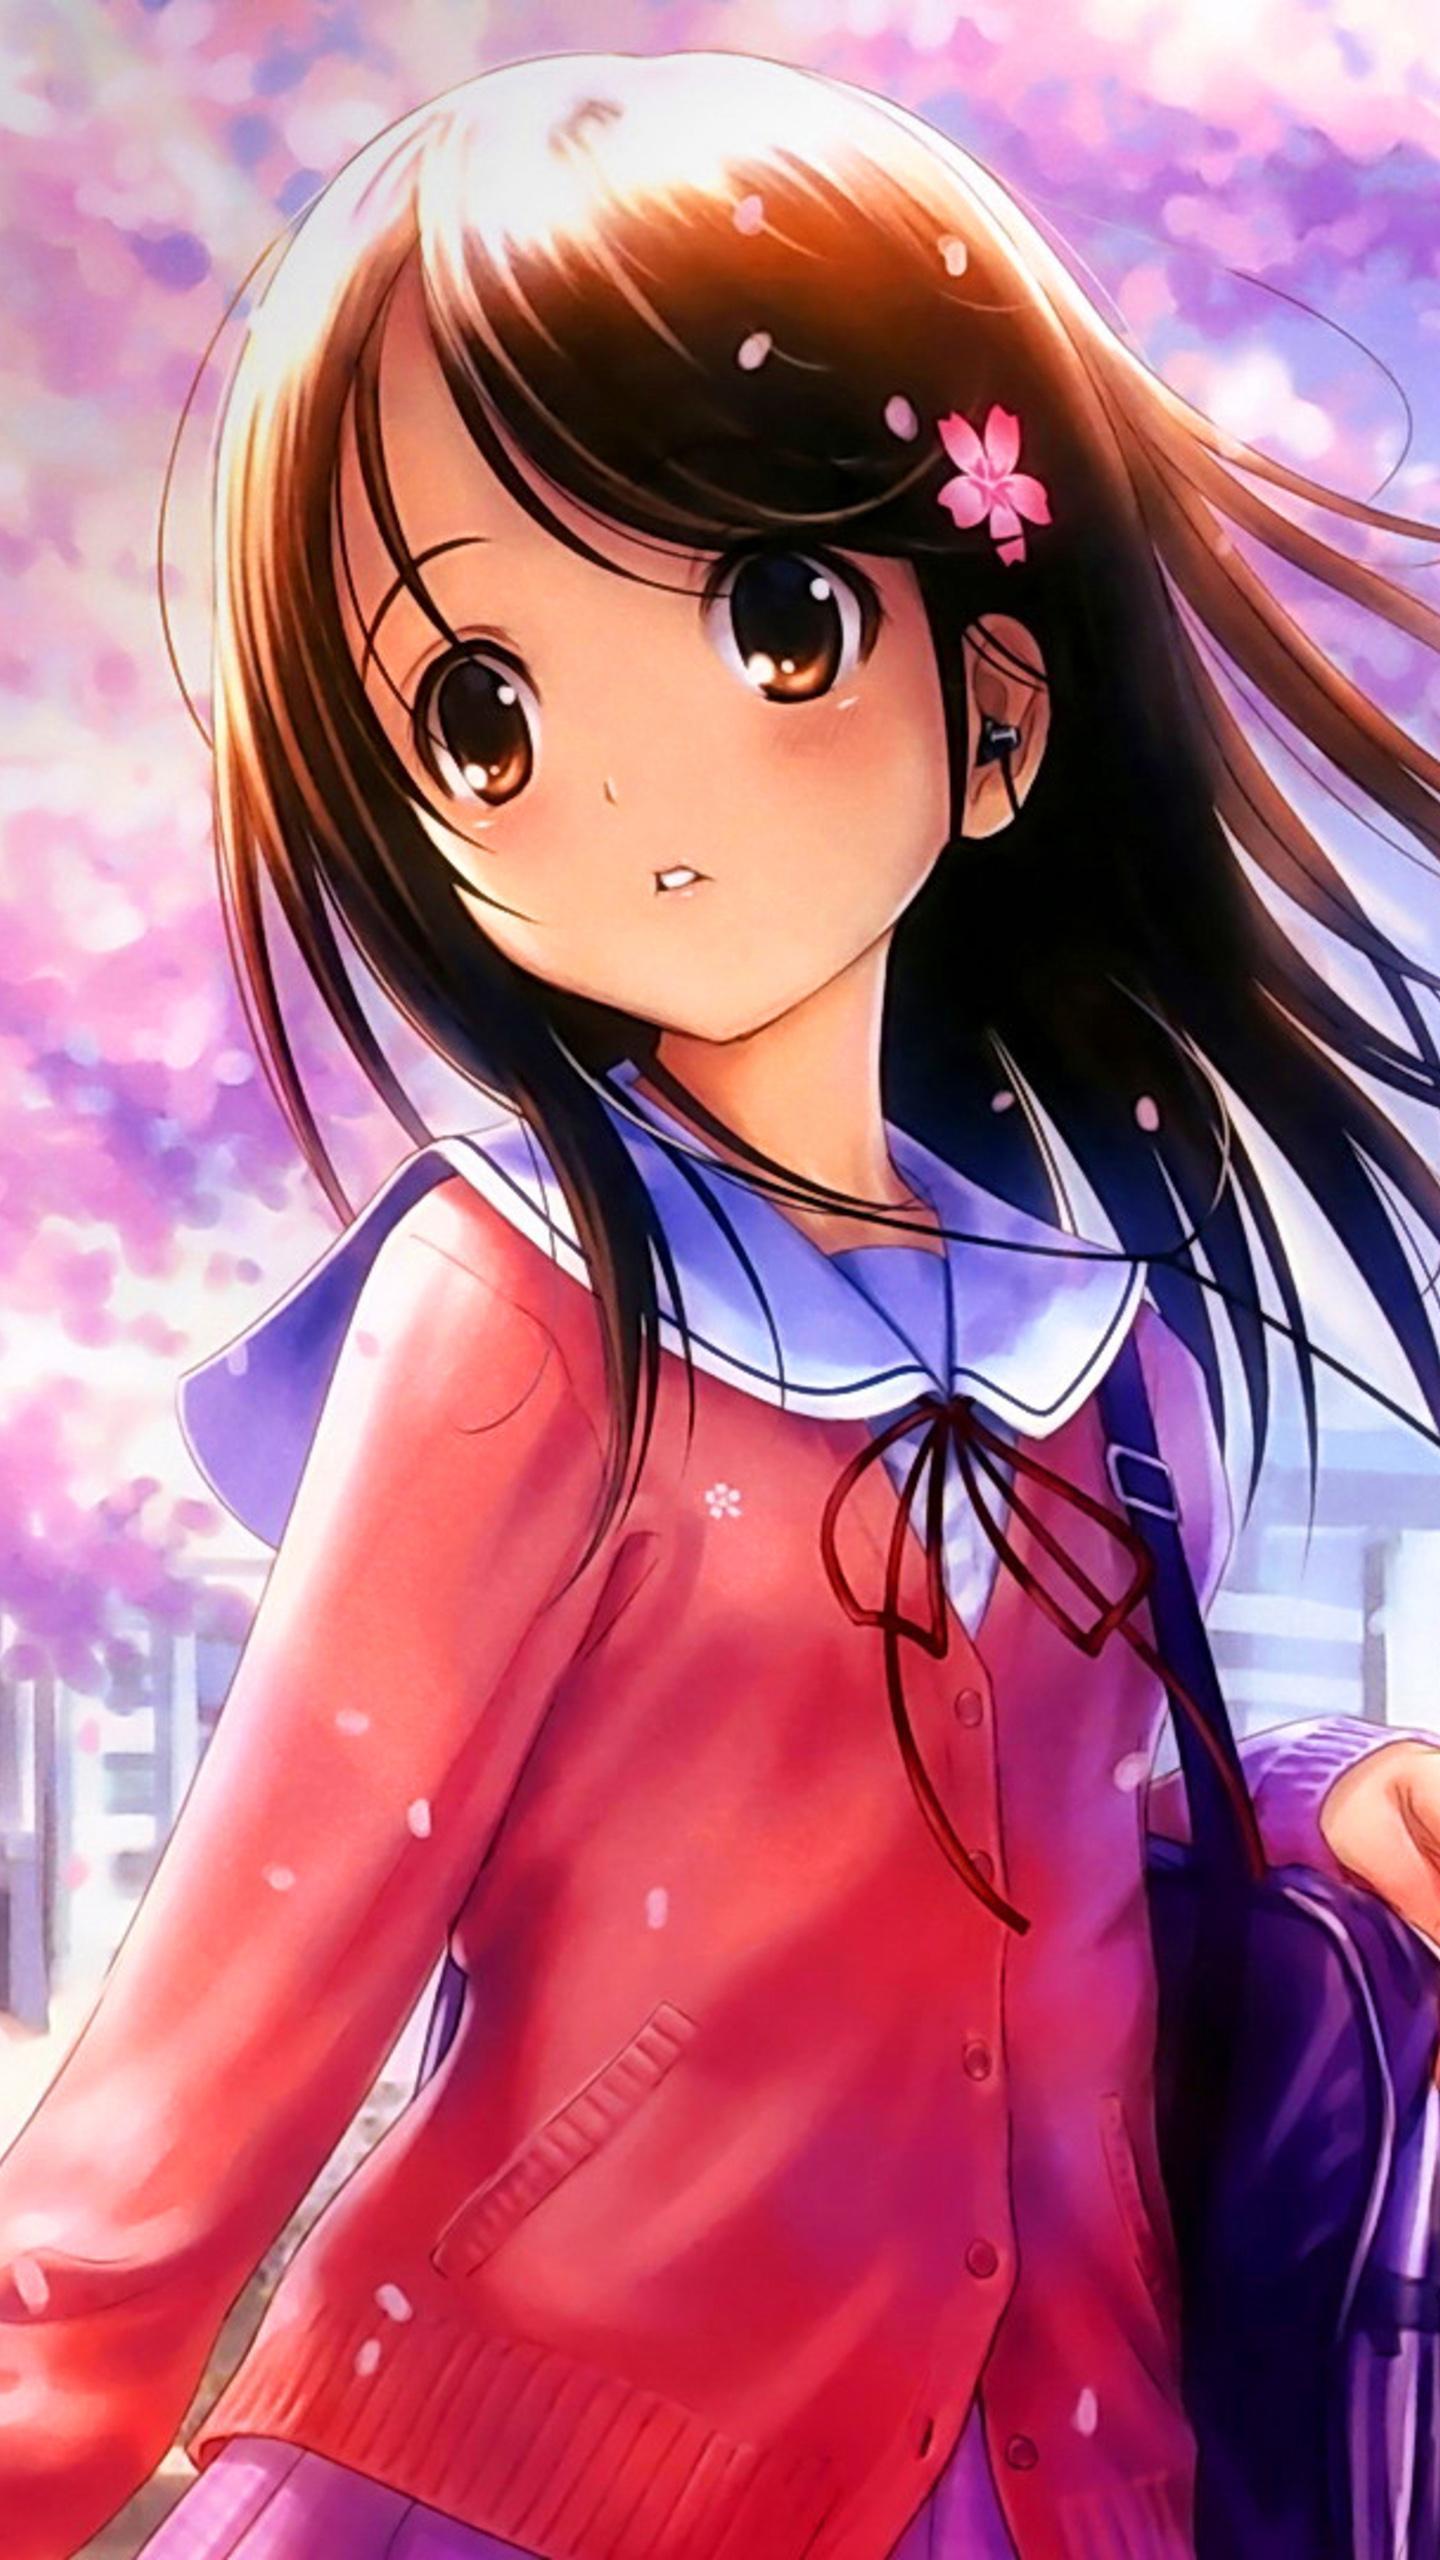 Anime Girl Wallpaper For Android Apk Download - wallpaper brown hair wallpaper cute roblox girl gfx